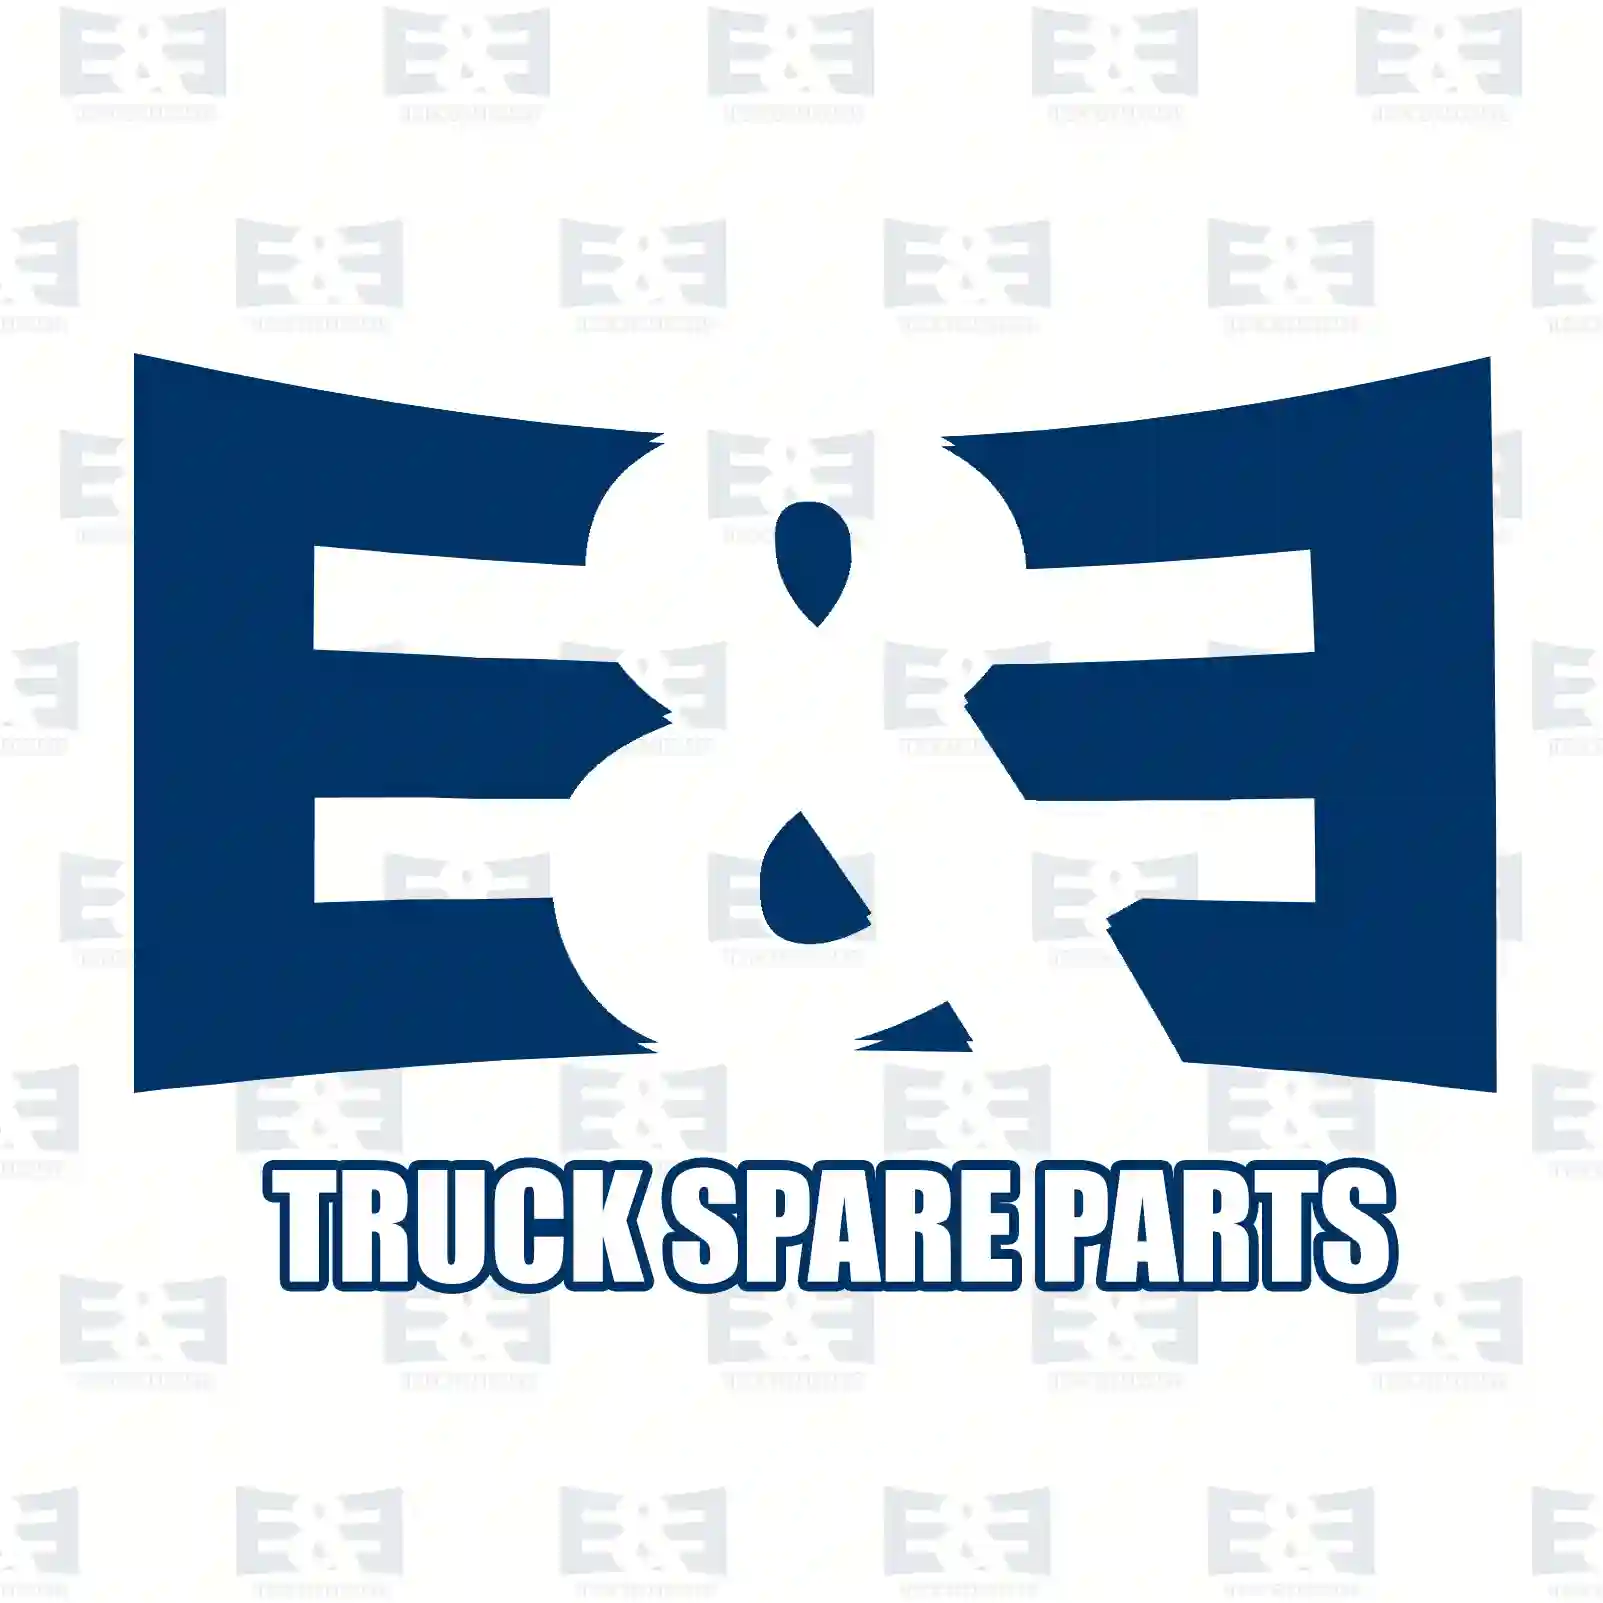  Vibration damper, belt tensioner || E&E Truck Spare Parts | Truck Spare Parts, Auotomotive Spare Parts